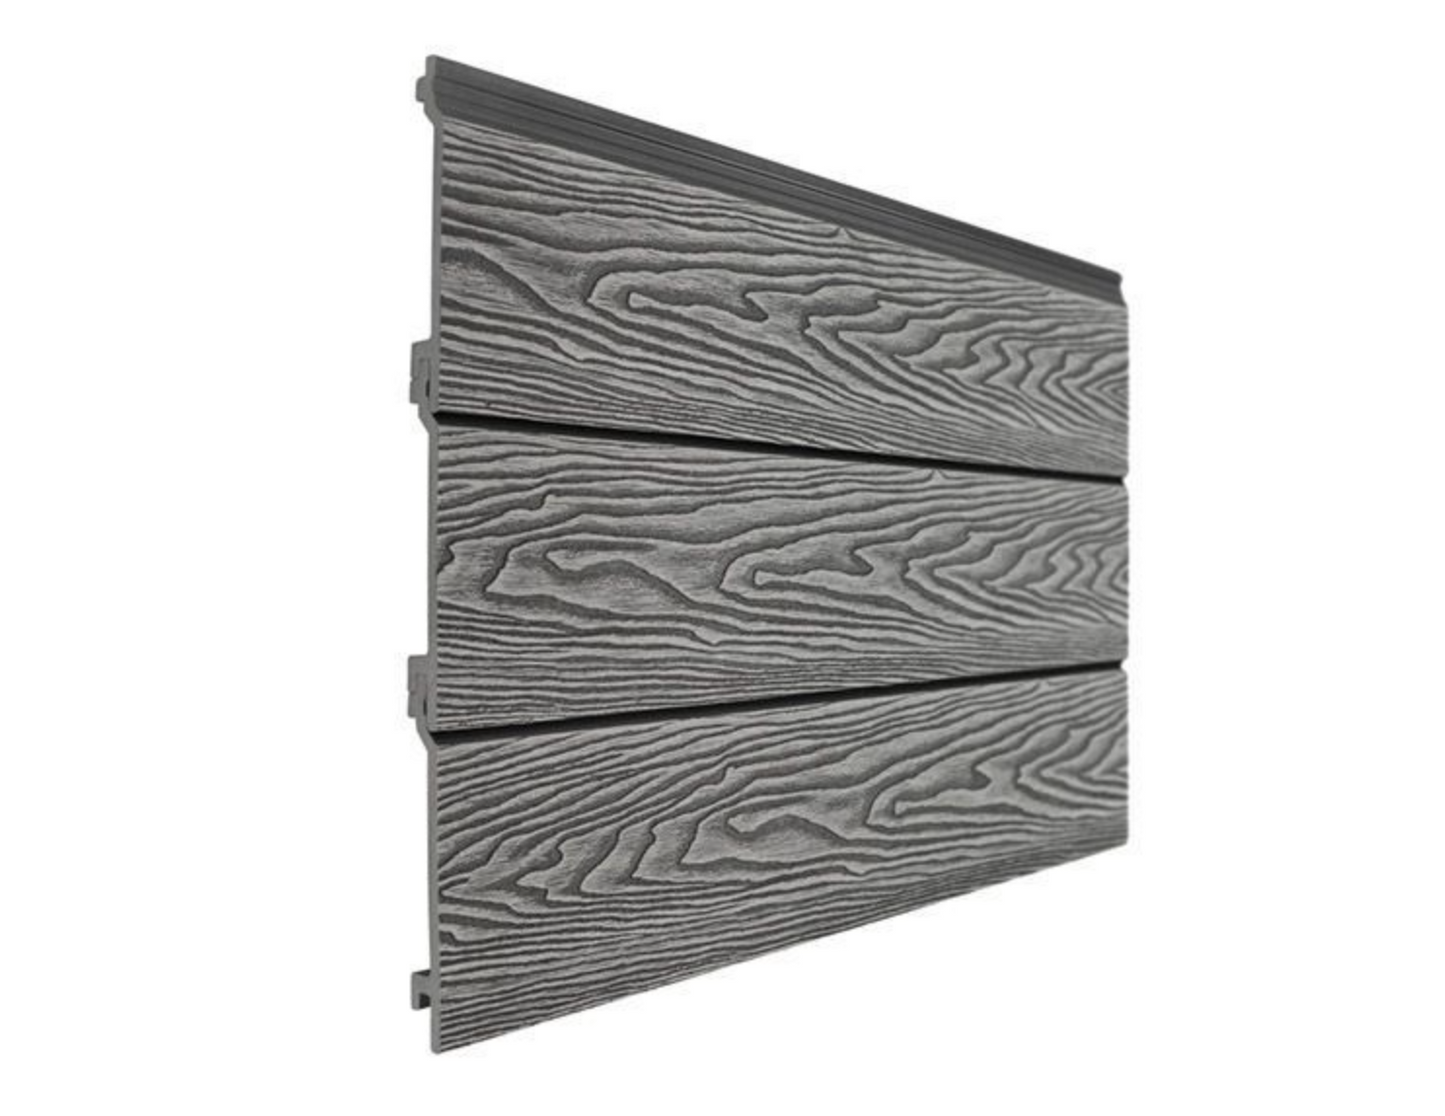 
                  
                    Woodgrain Composite Wall Cladding 3.6m - Grey
                  
                